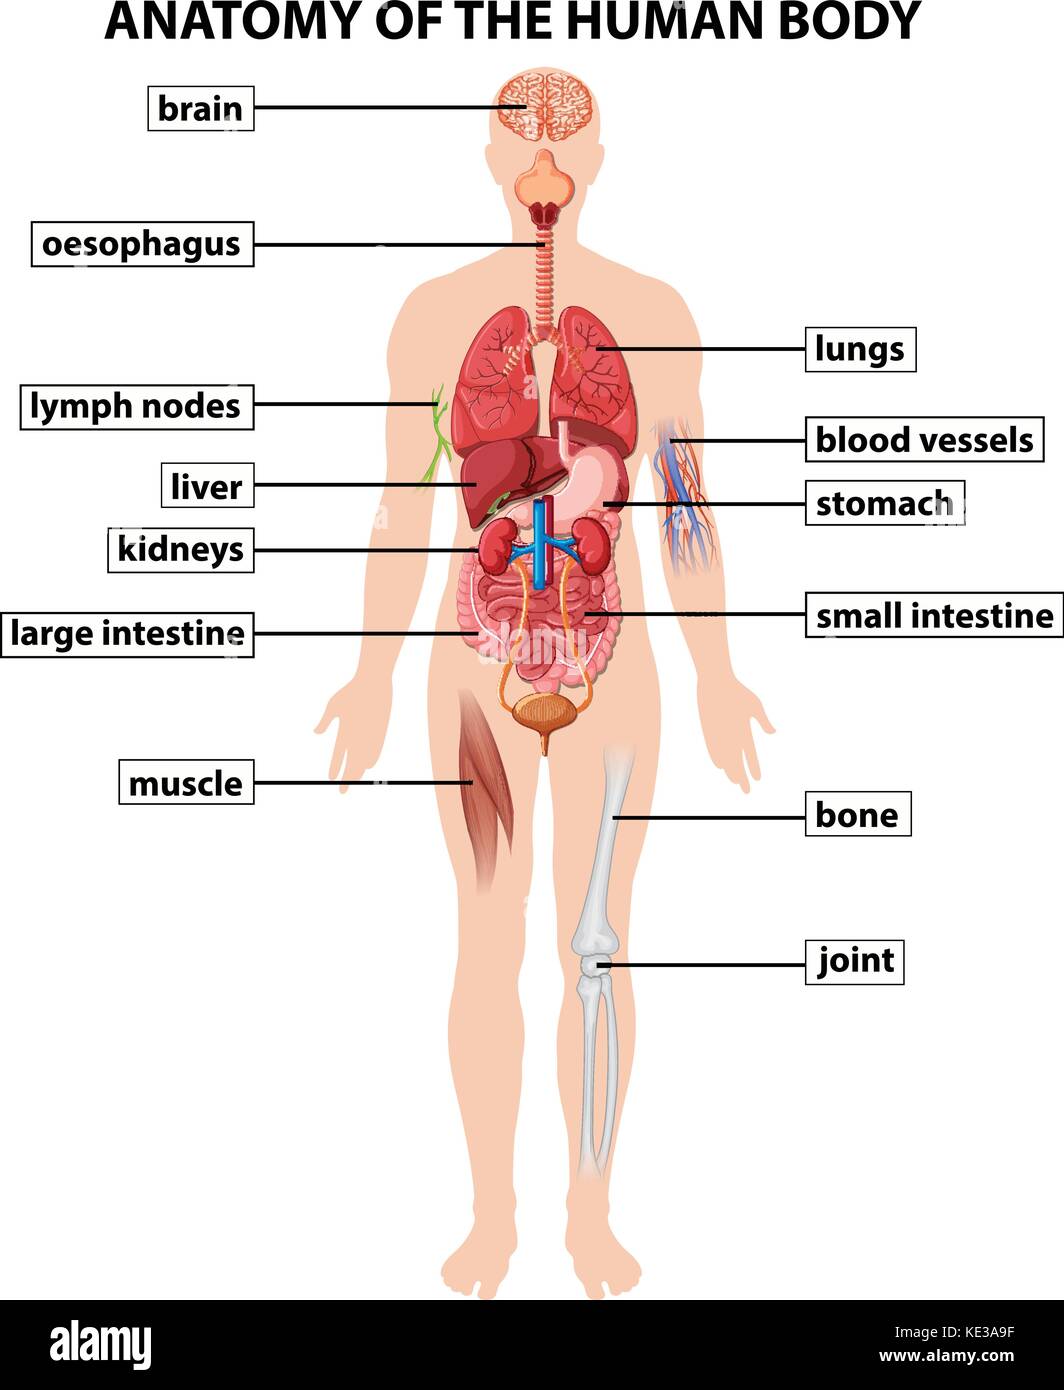 Human Body Anatomy Diagram Art Stock Photos & Human Body Anatomy